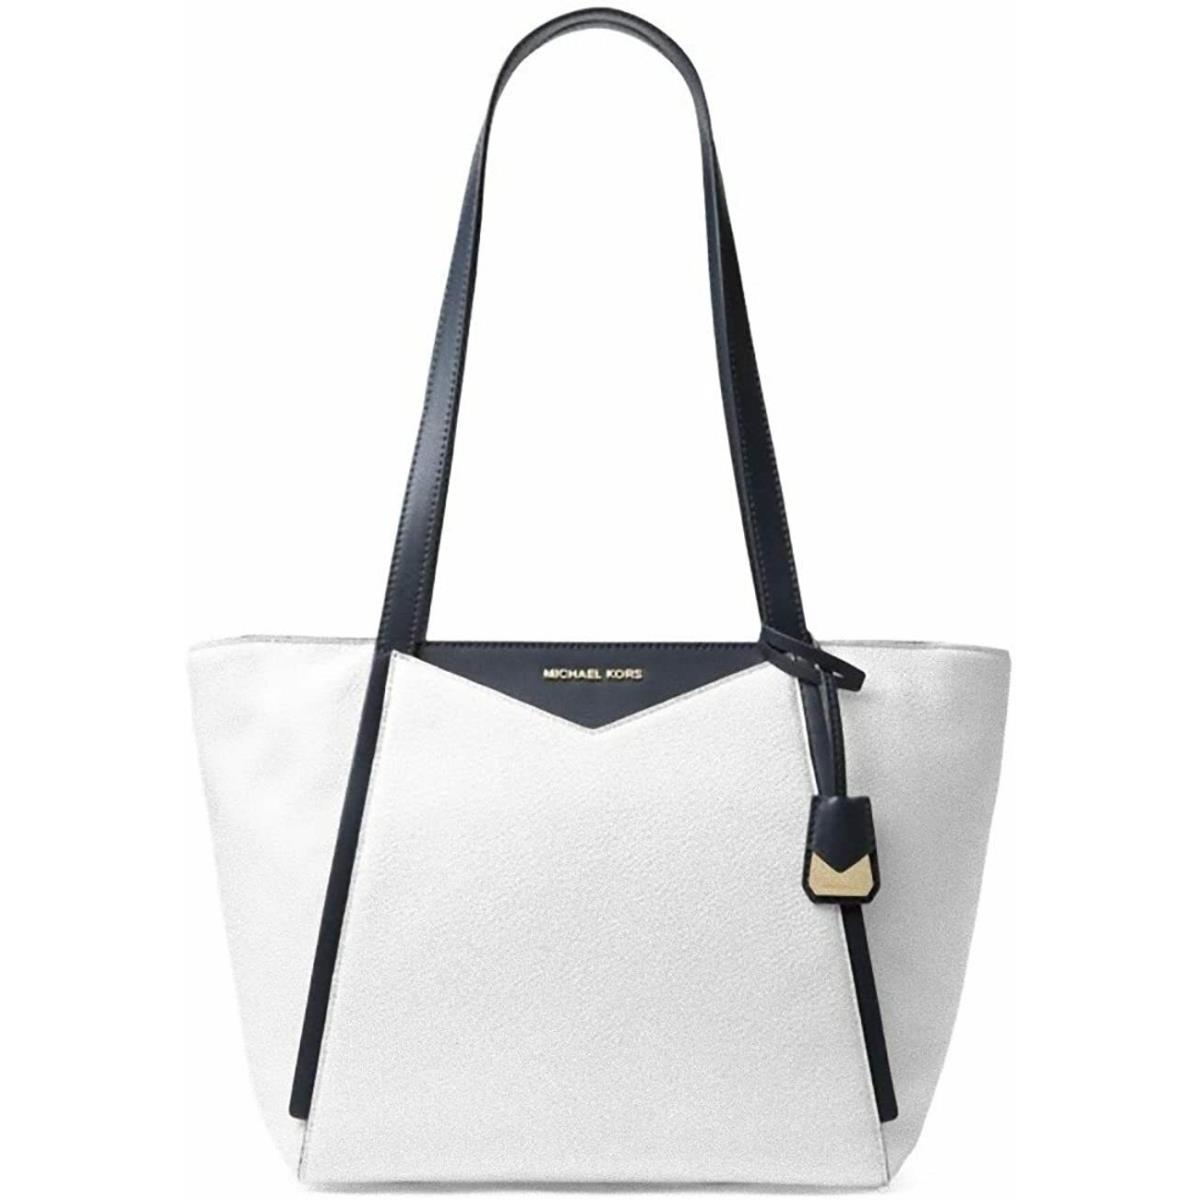 Michael Kors Whitney Small Leather Top Zip Tote Optic White Navy Handbag Bag - Exterior: Optic white and navy blue admiral, Lining: Optic White Navy, Handle/Strap: Navy Blue